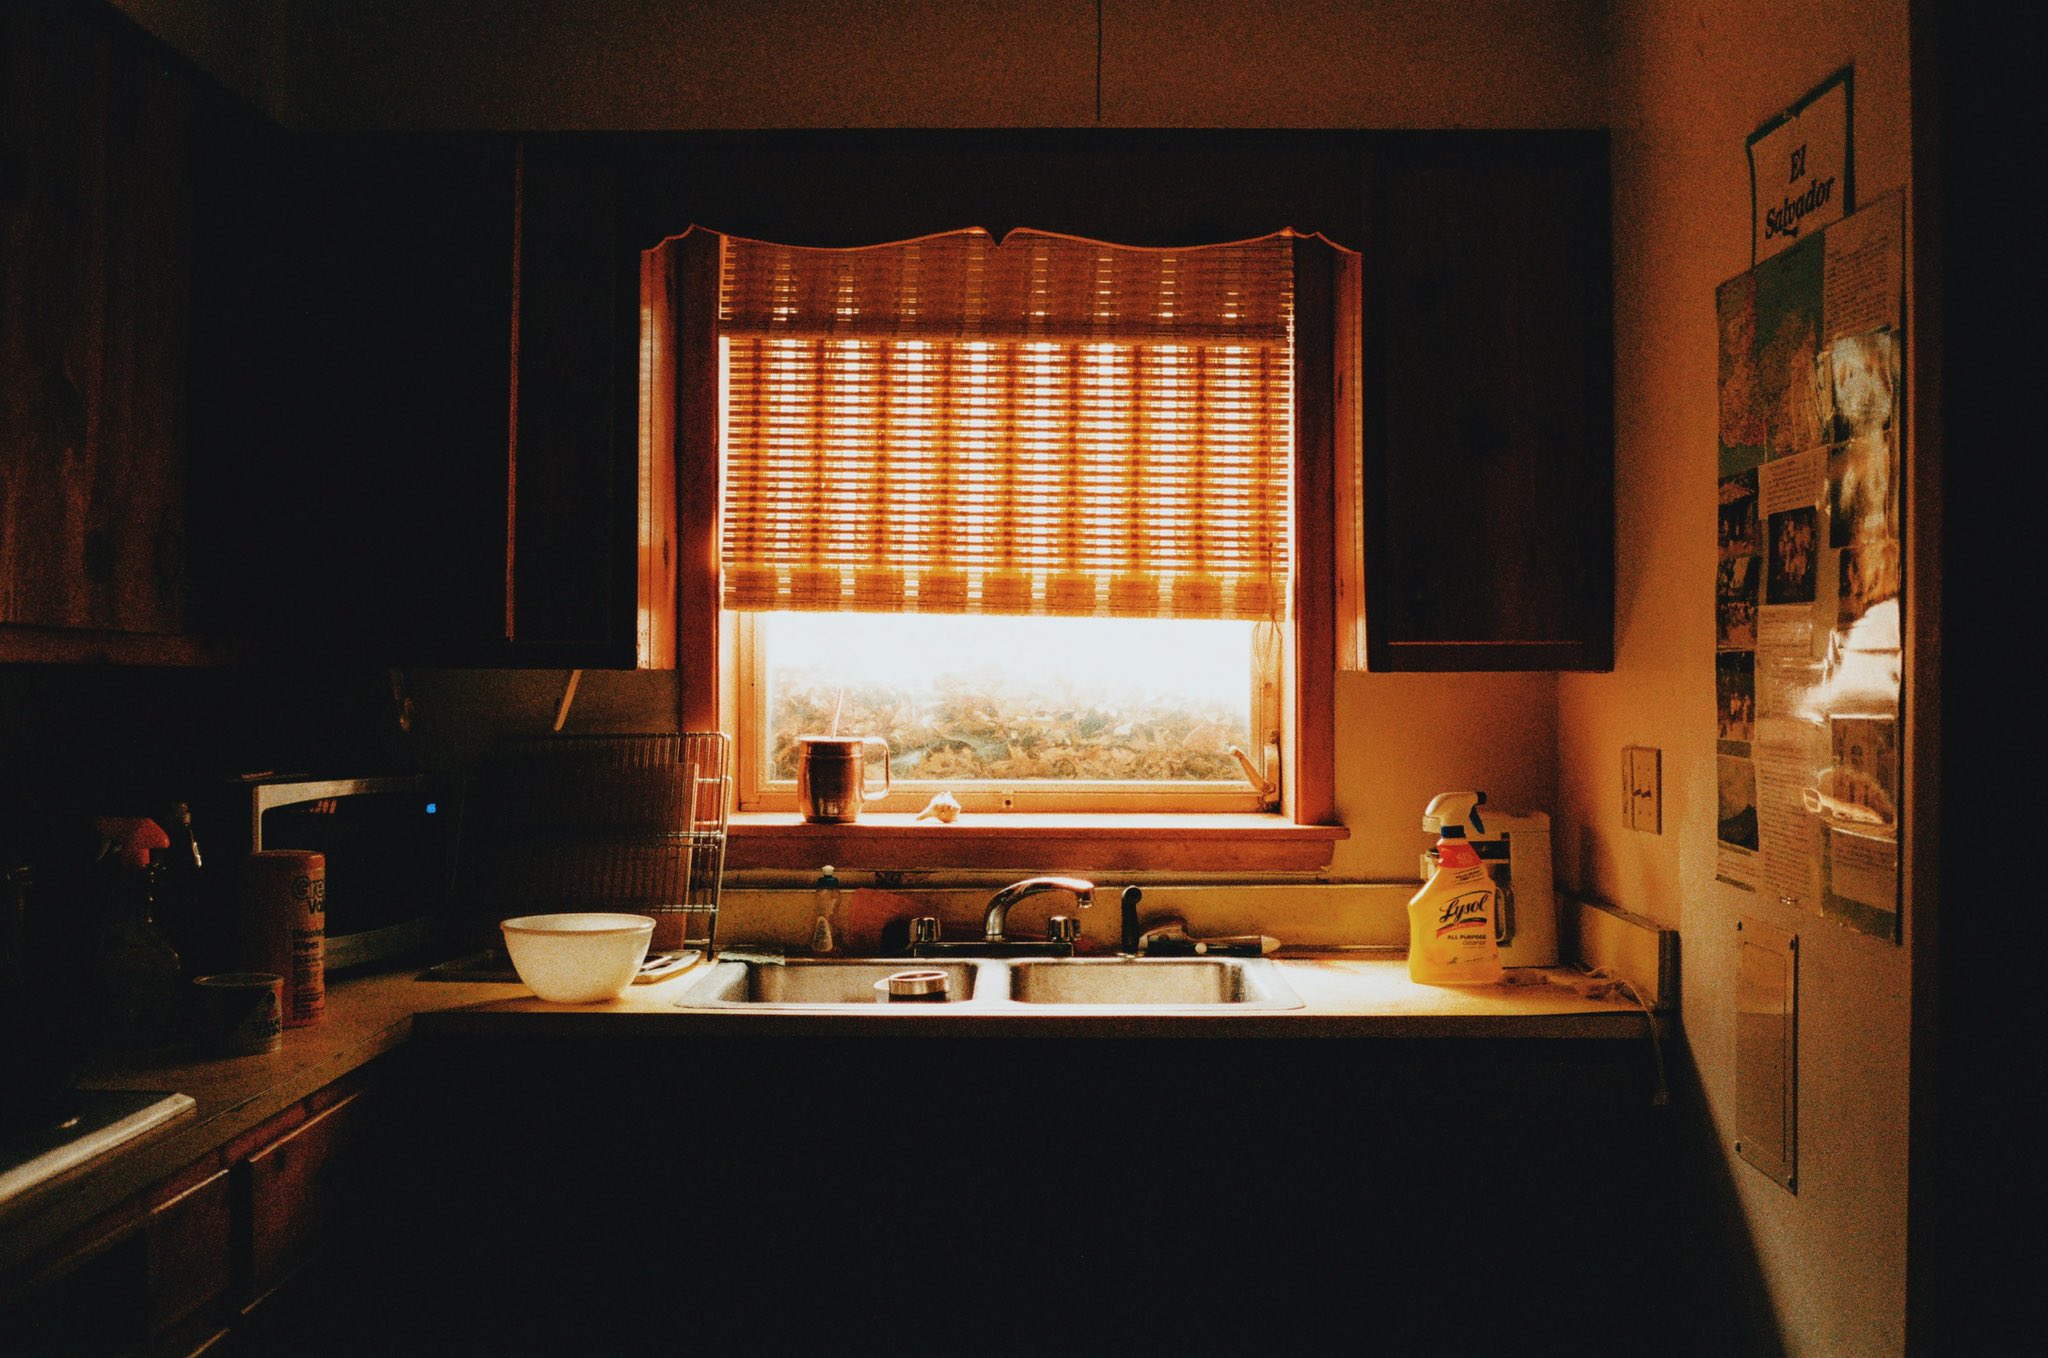 General 2048x1358 window kitchen sunset interior blinds low light